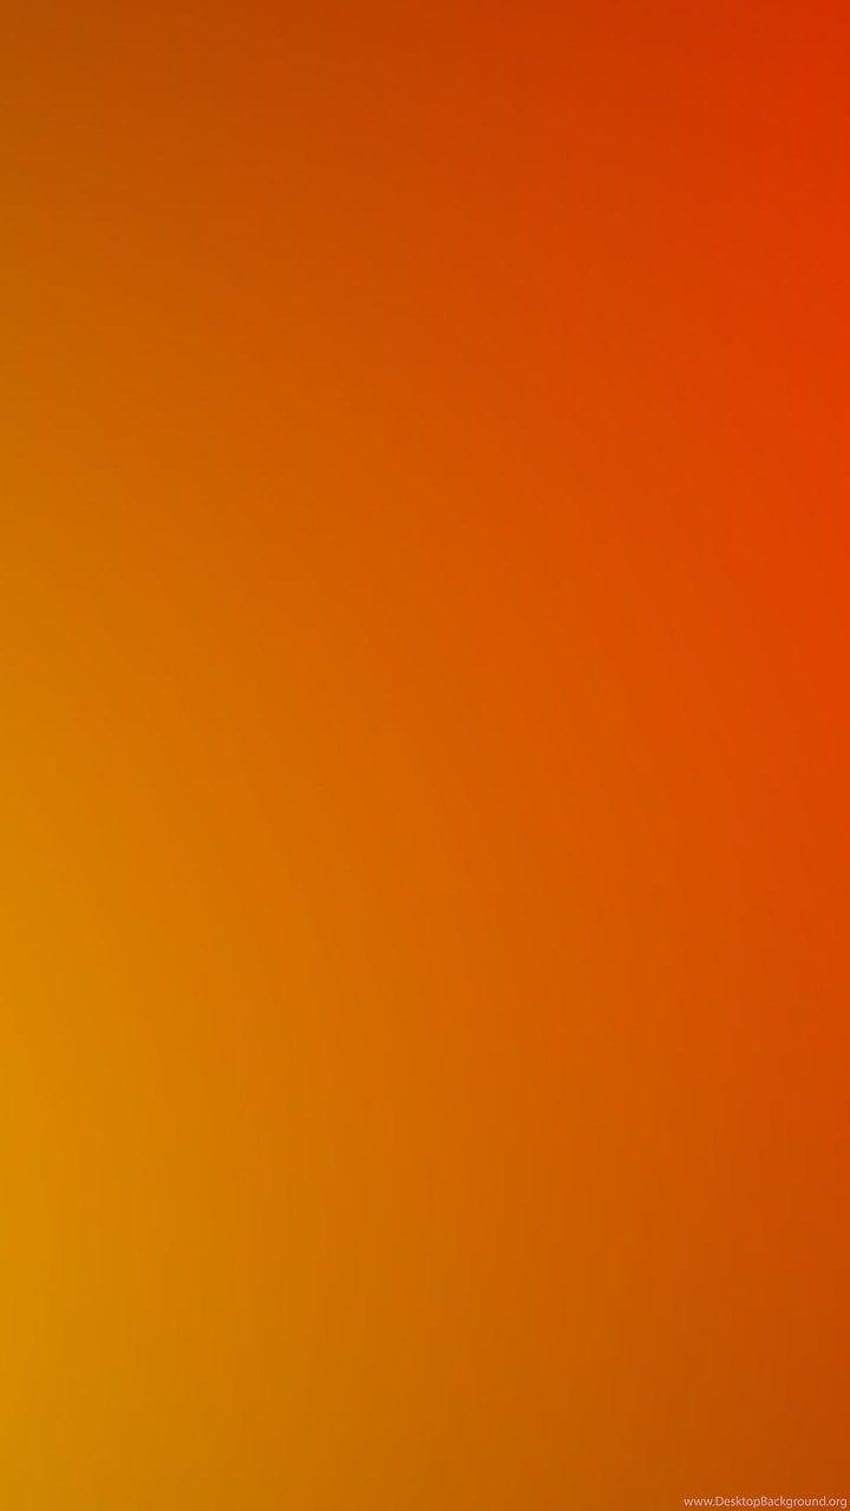 Background Warna Orange Background, background warna orange wallpaper ponsel HD